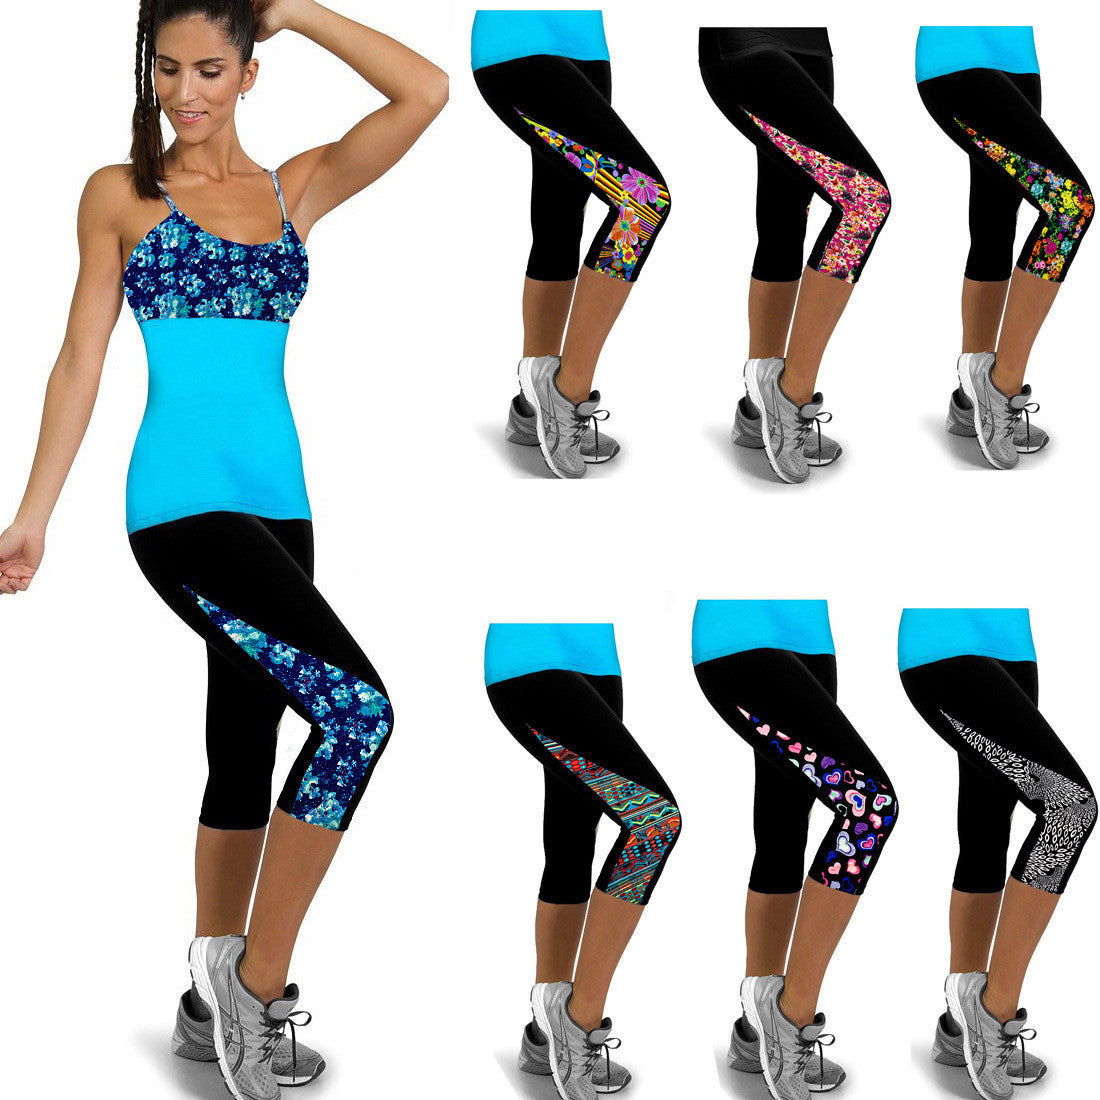 Flower Print Side Triangle Fashion 3/4 Pants Yoga Sport Leggings - Oh Yours Fashion - 2